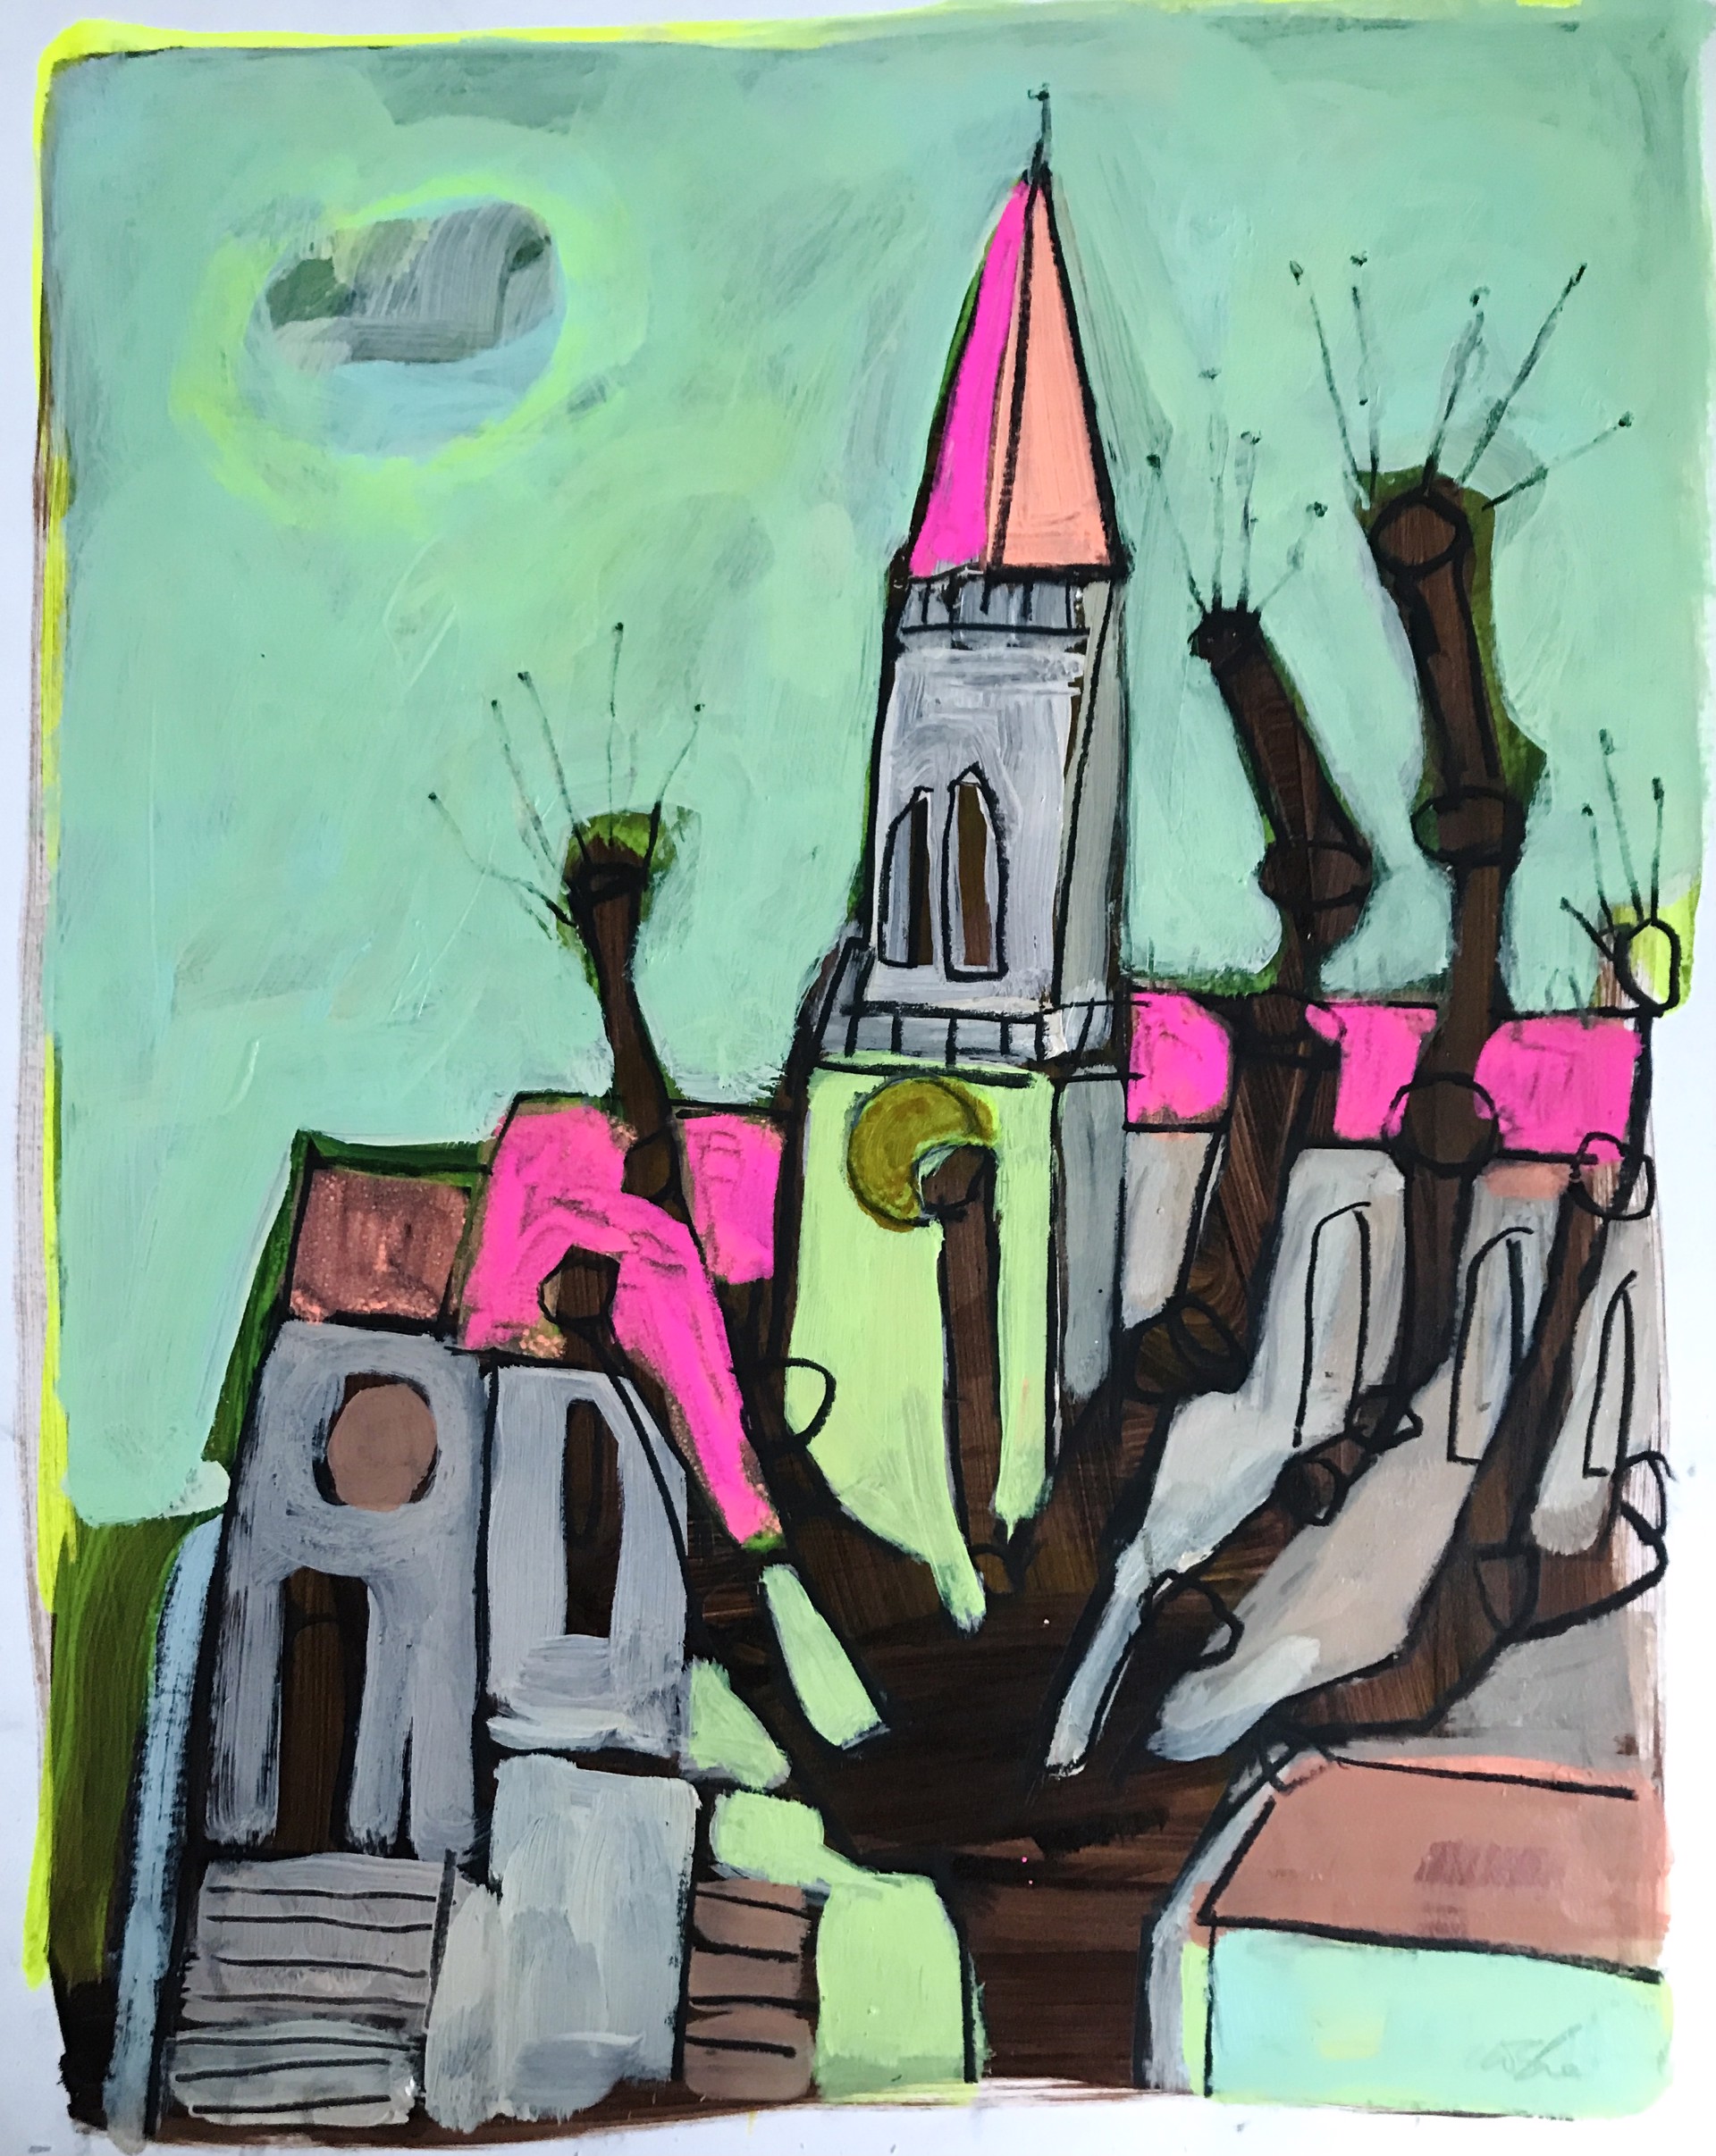 L’arbre devant l’église Notre-Dame by Rachael Van Dyke